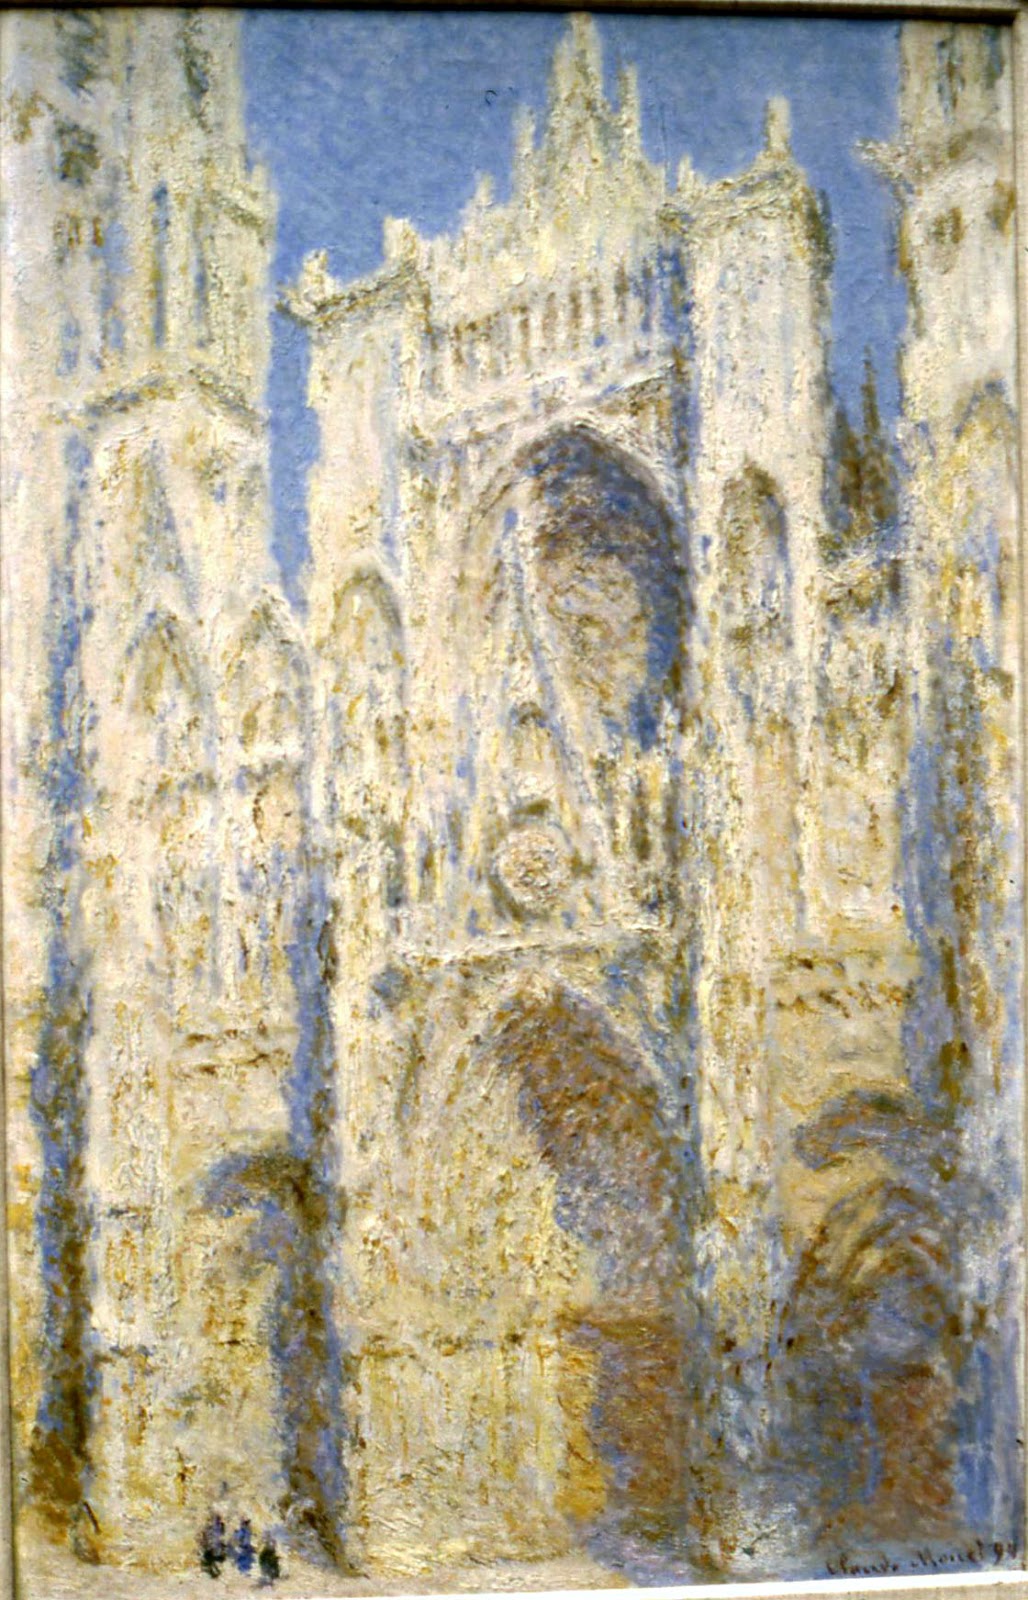 Claude+Monet-1840-1926 (651).jpg